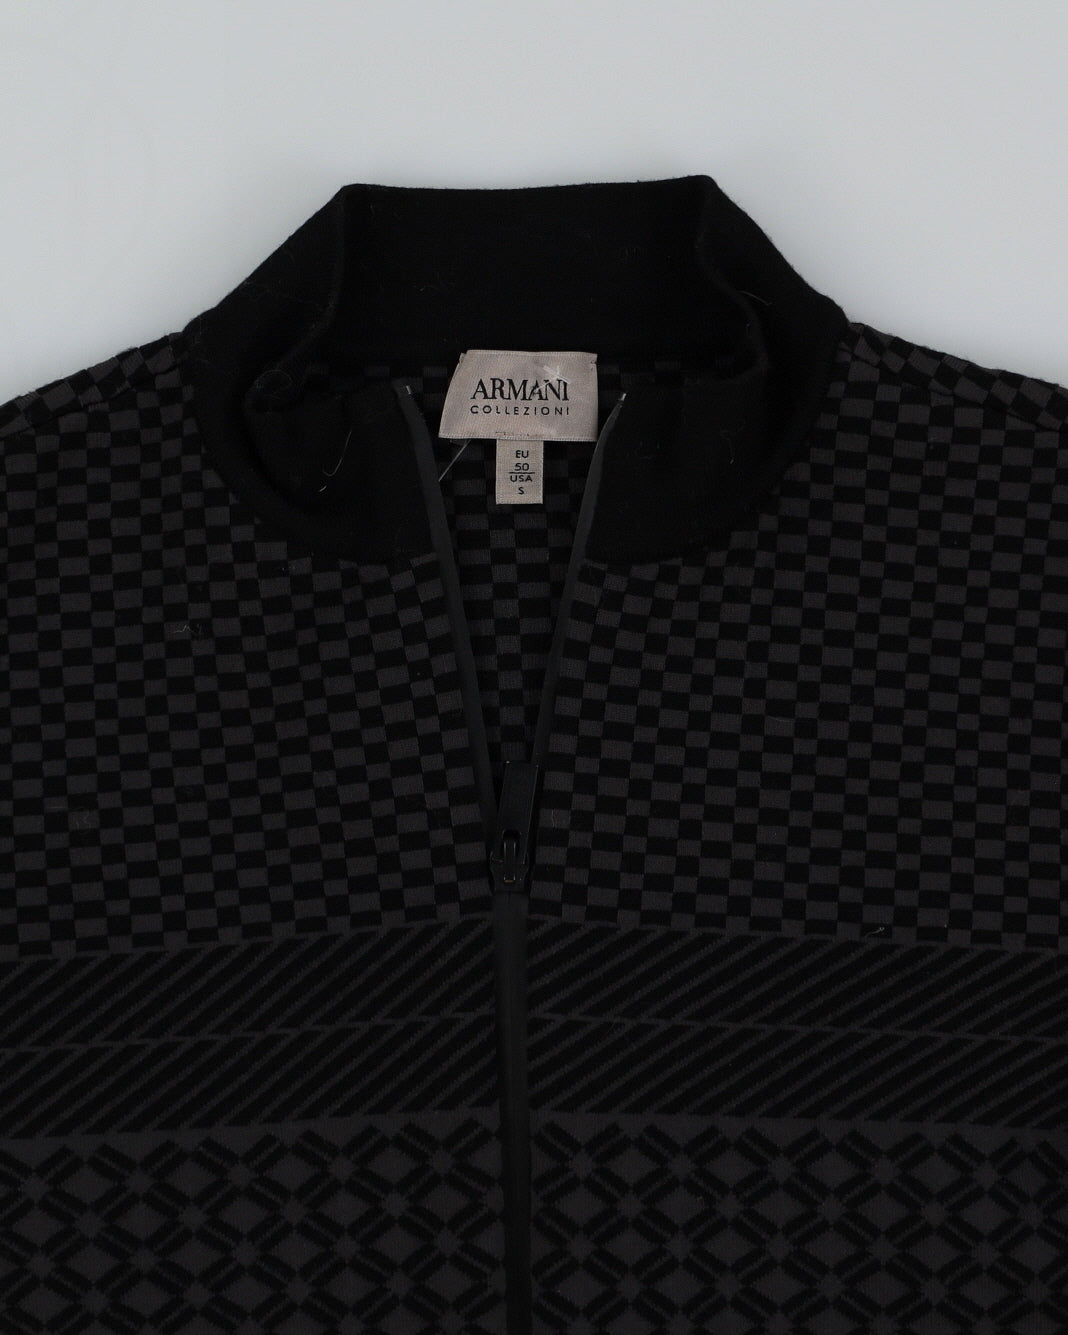 Armani Collezioni Dark Grey Textured Zip Up Sweatshirt - S